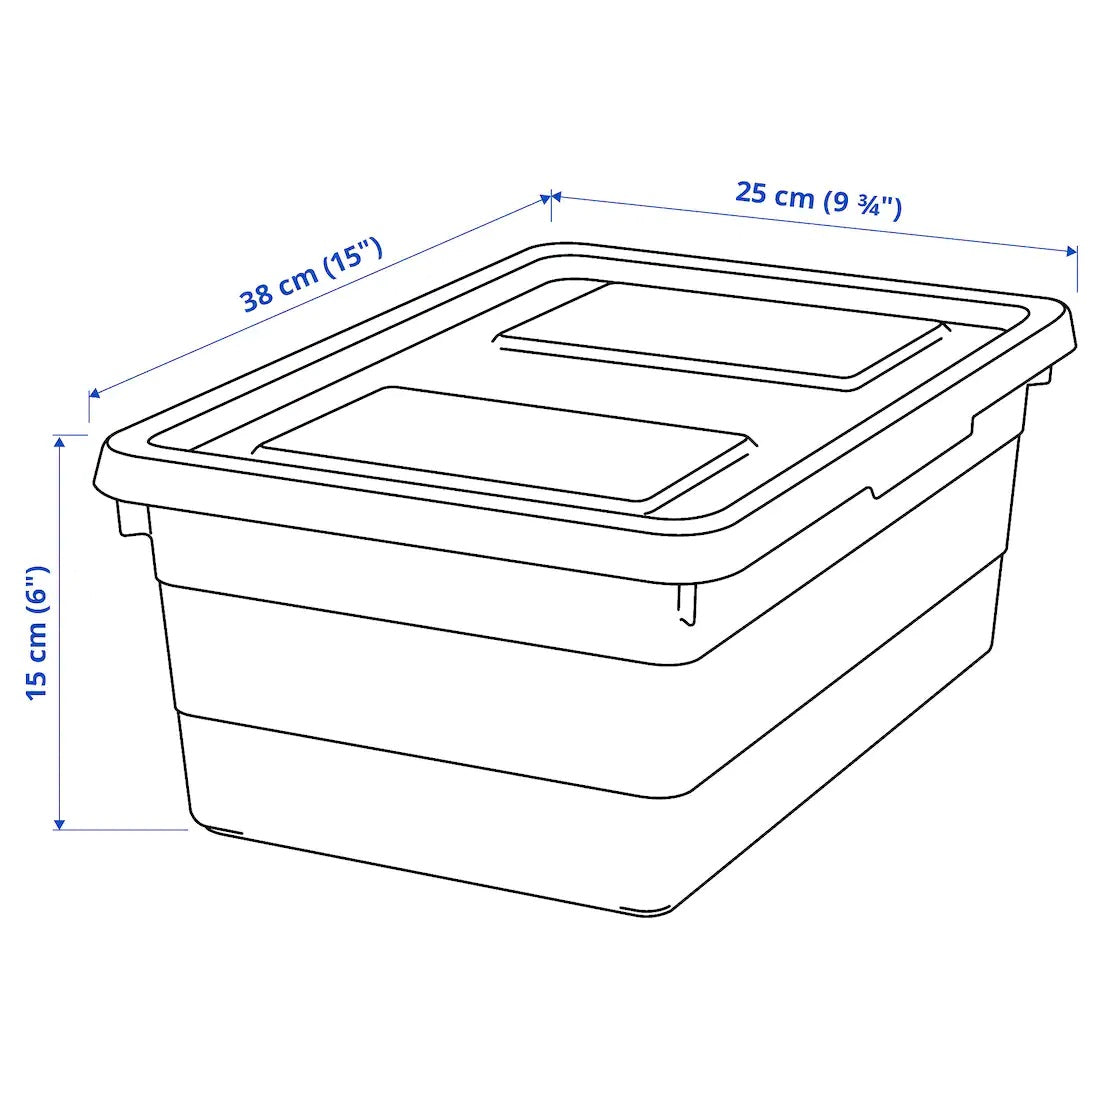 SOCKERBIT Storage box with lid, light blue38x25x15 cm